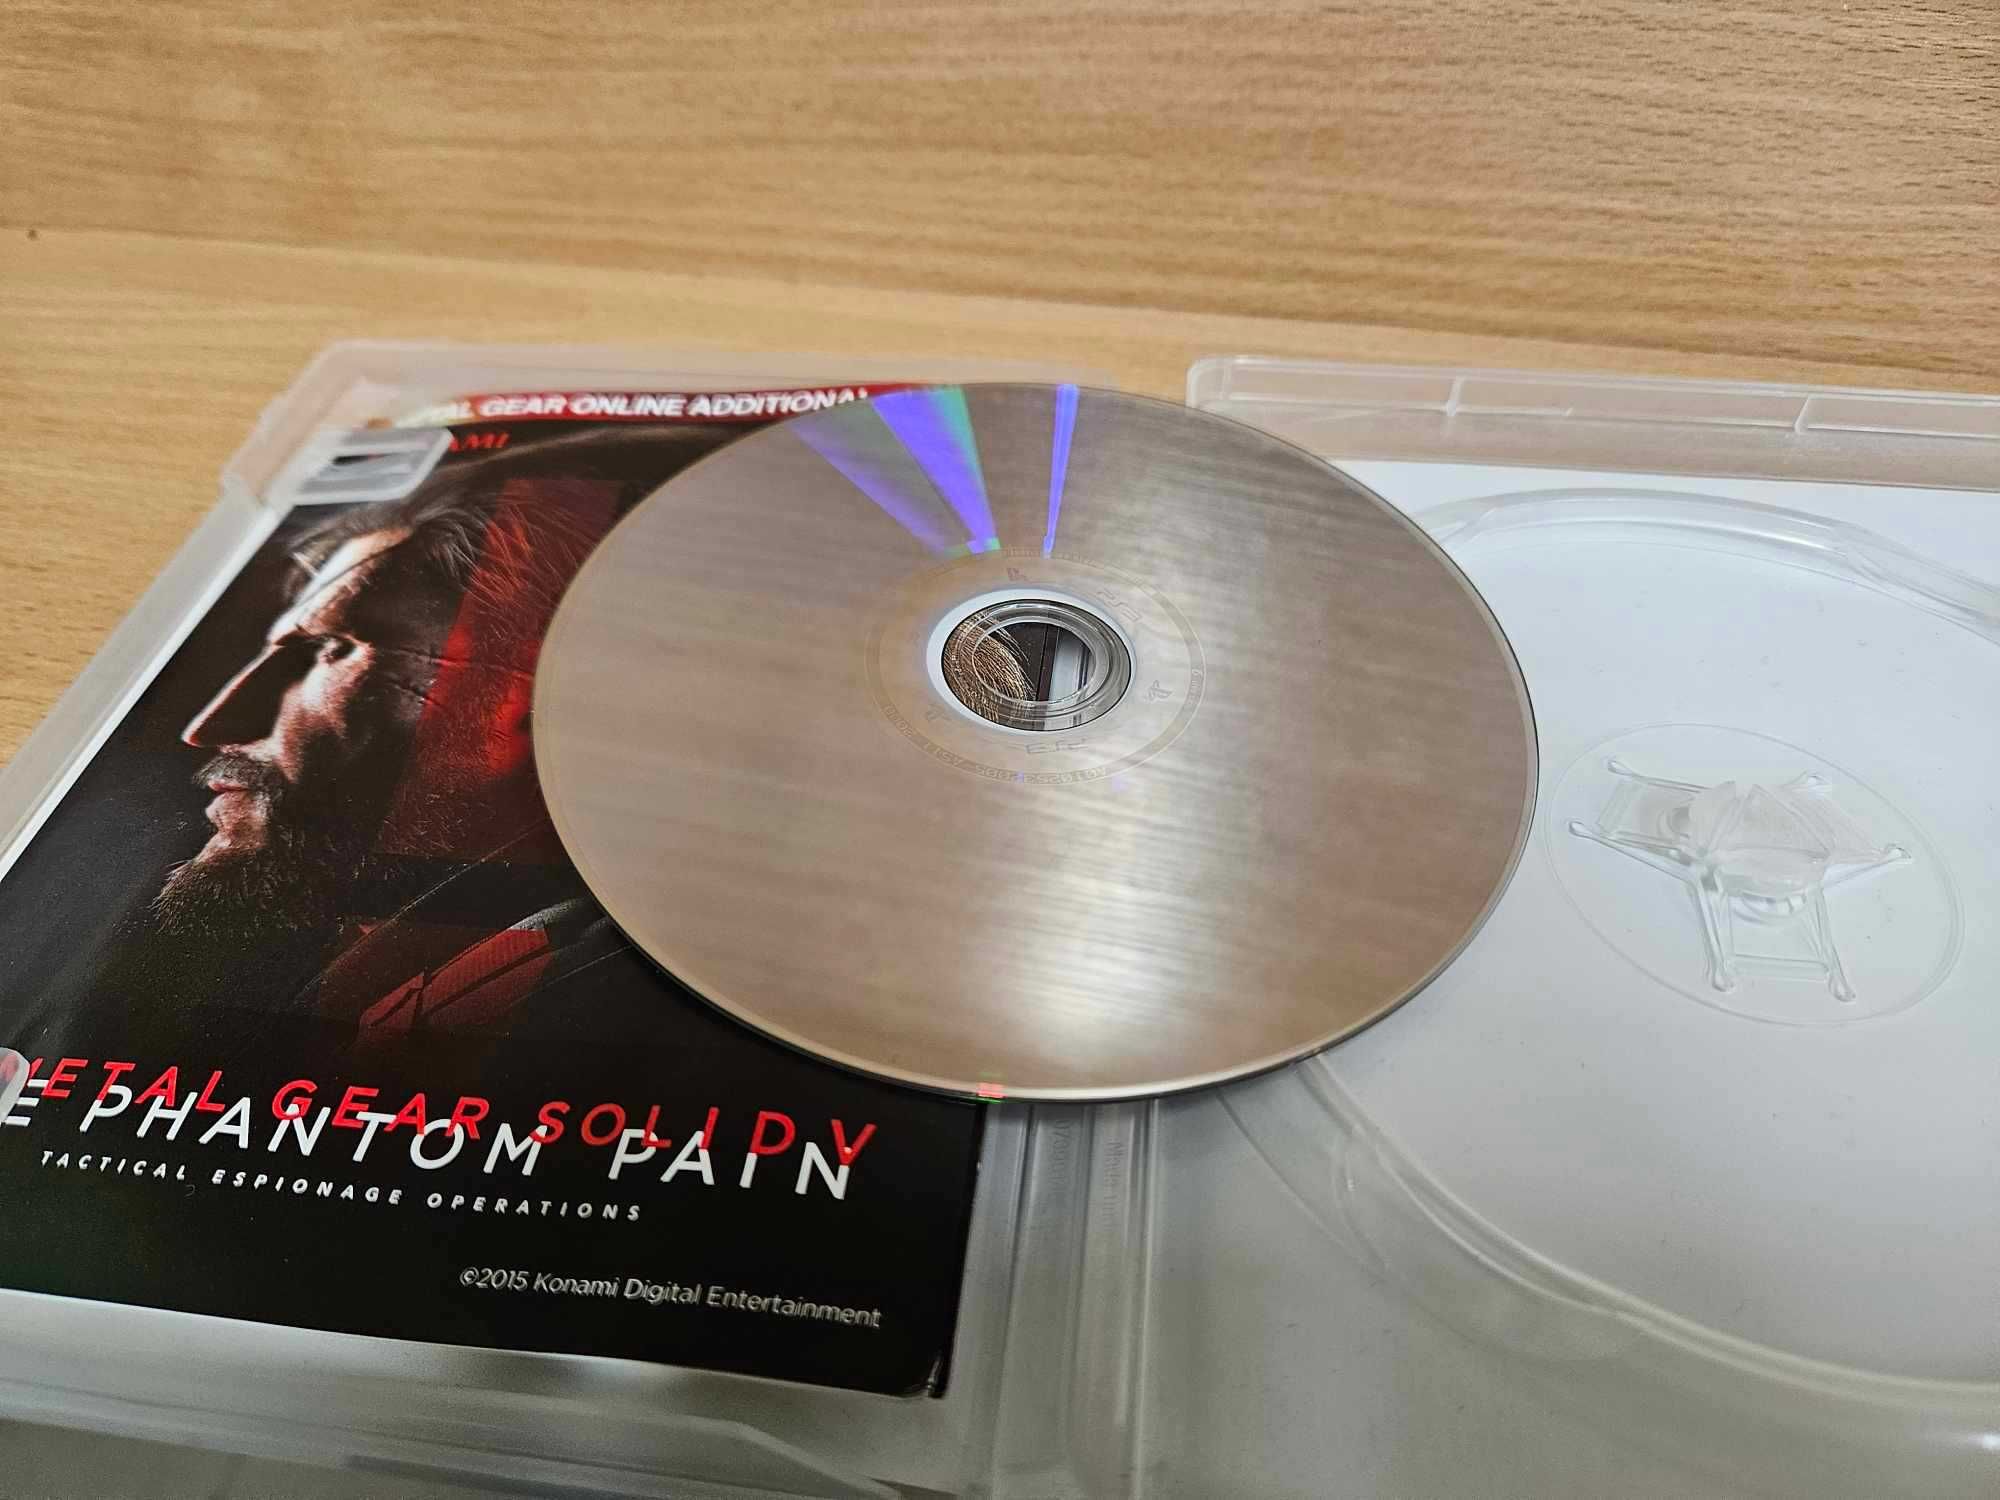 Gra na PS3 - Metal Gear Solid V: The Phantom Pain